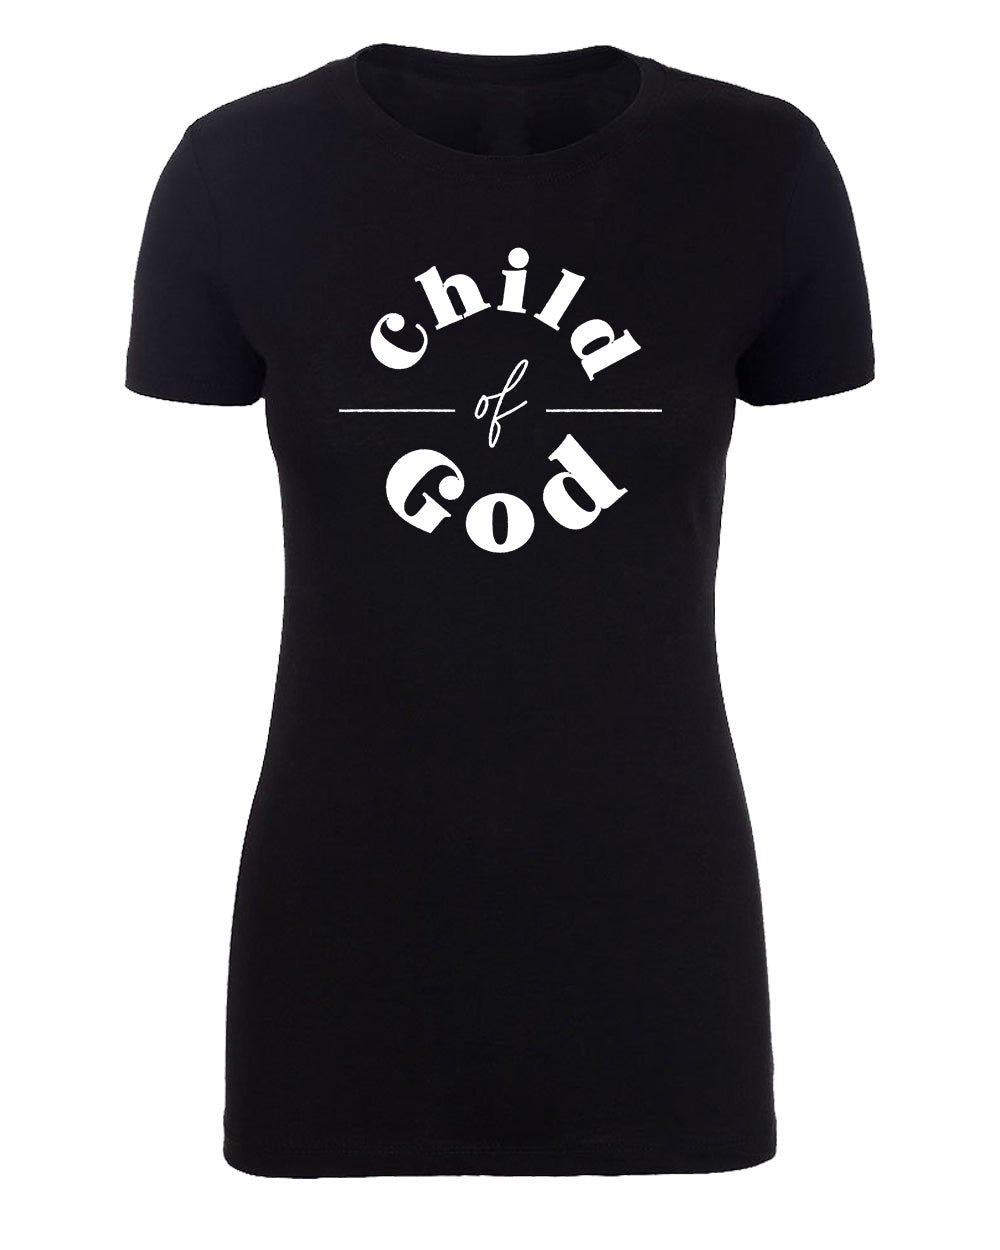 Child of God Womens Christian T Shirts - Mato & Hash